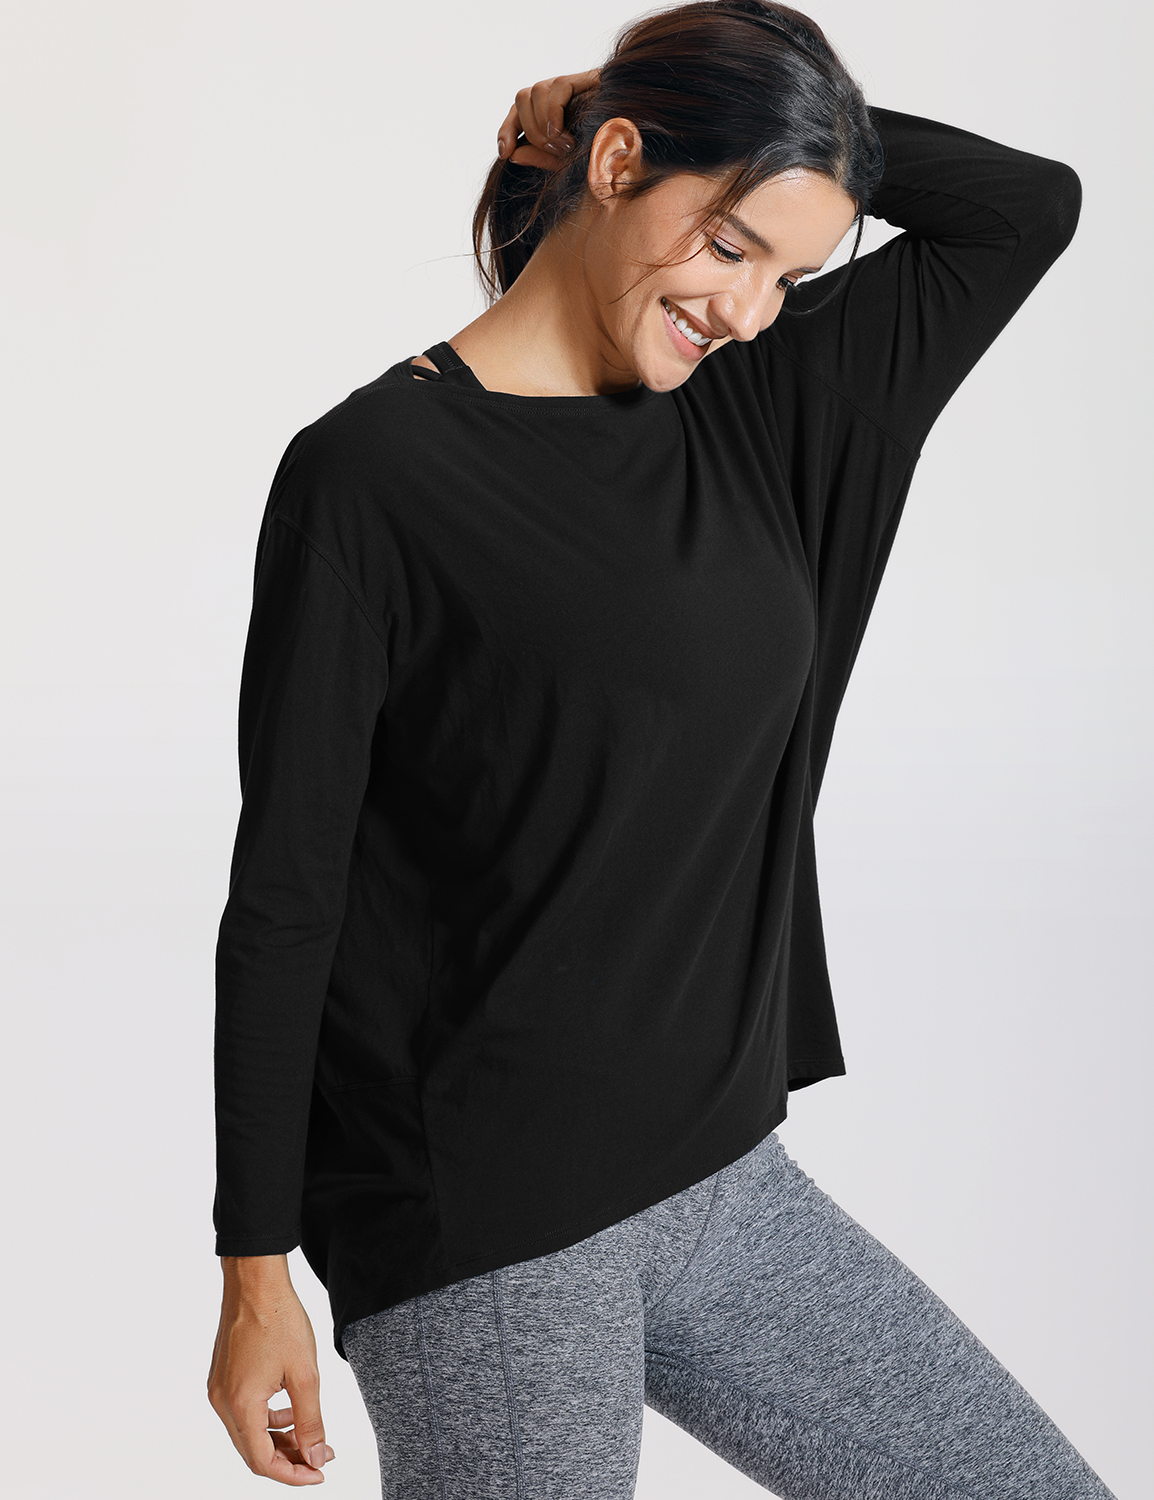 Muzniuer Long Sleeve Workout Tops for Women-Plain Long Sleeve Shirts Yoga  Tops Gym Sports T-Shirt with Thumb Hole